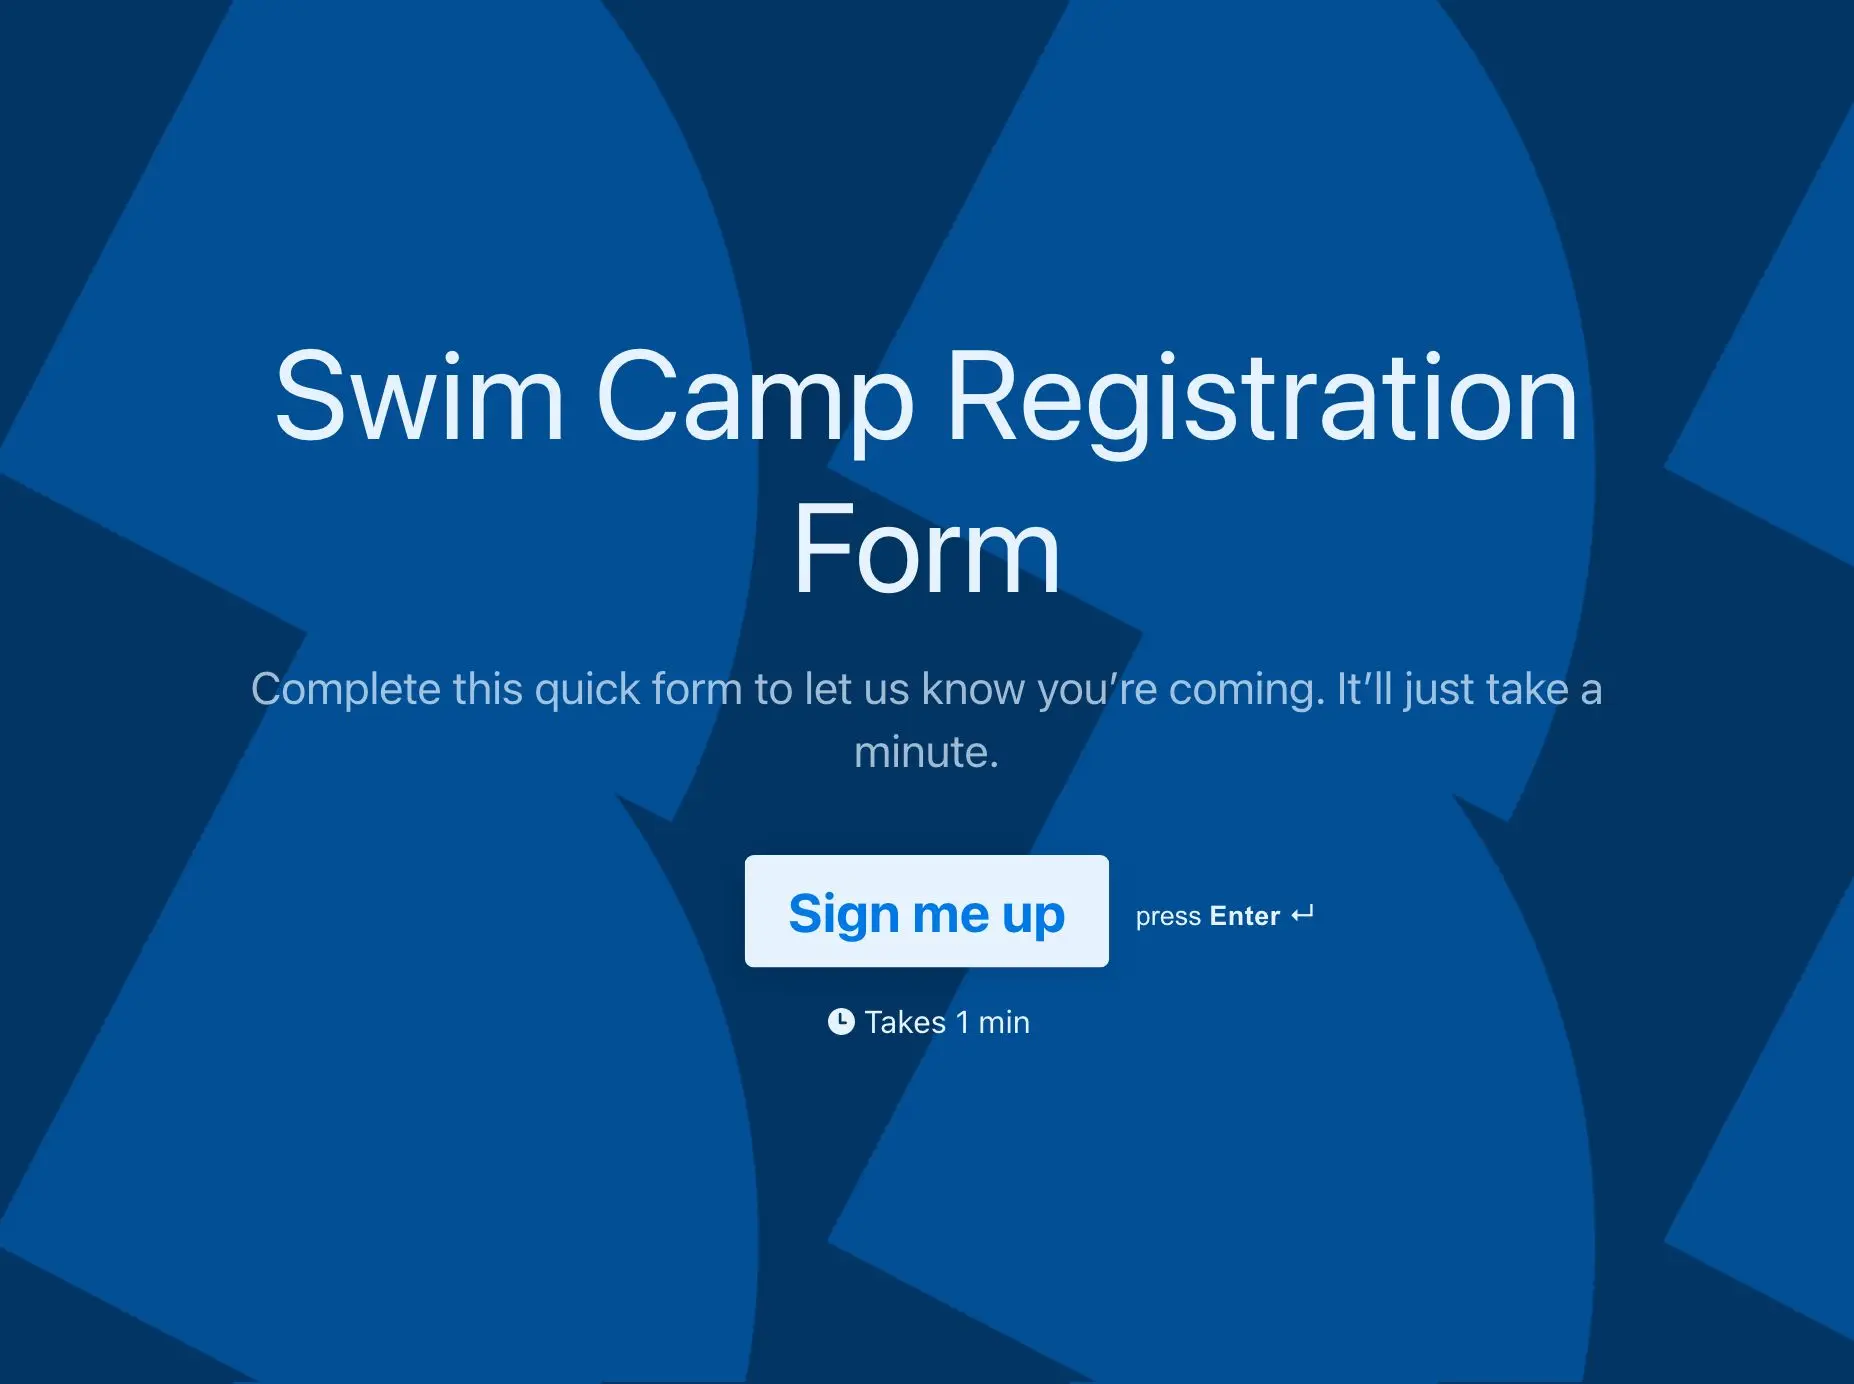 Swim Camp Registration Form Template Hero